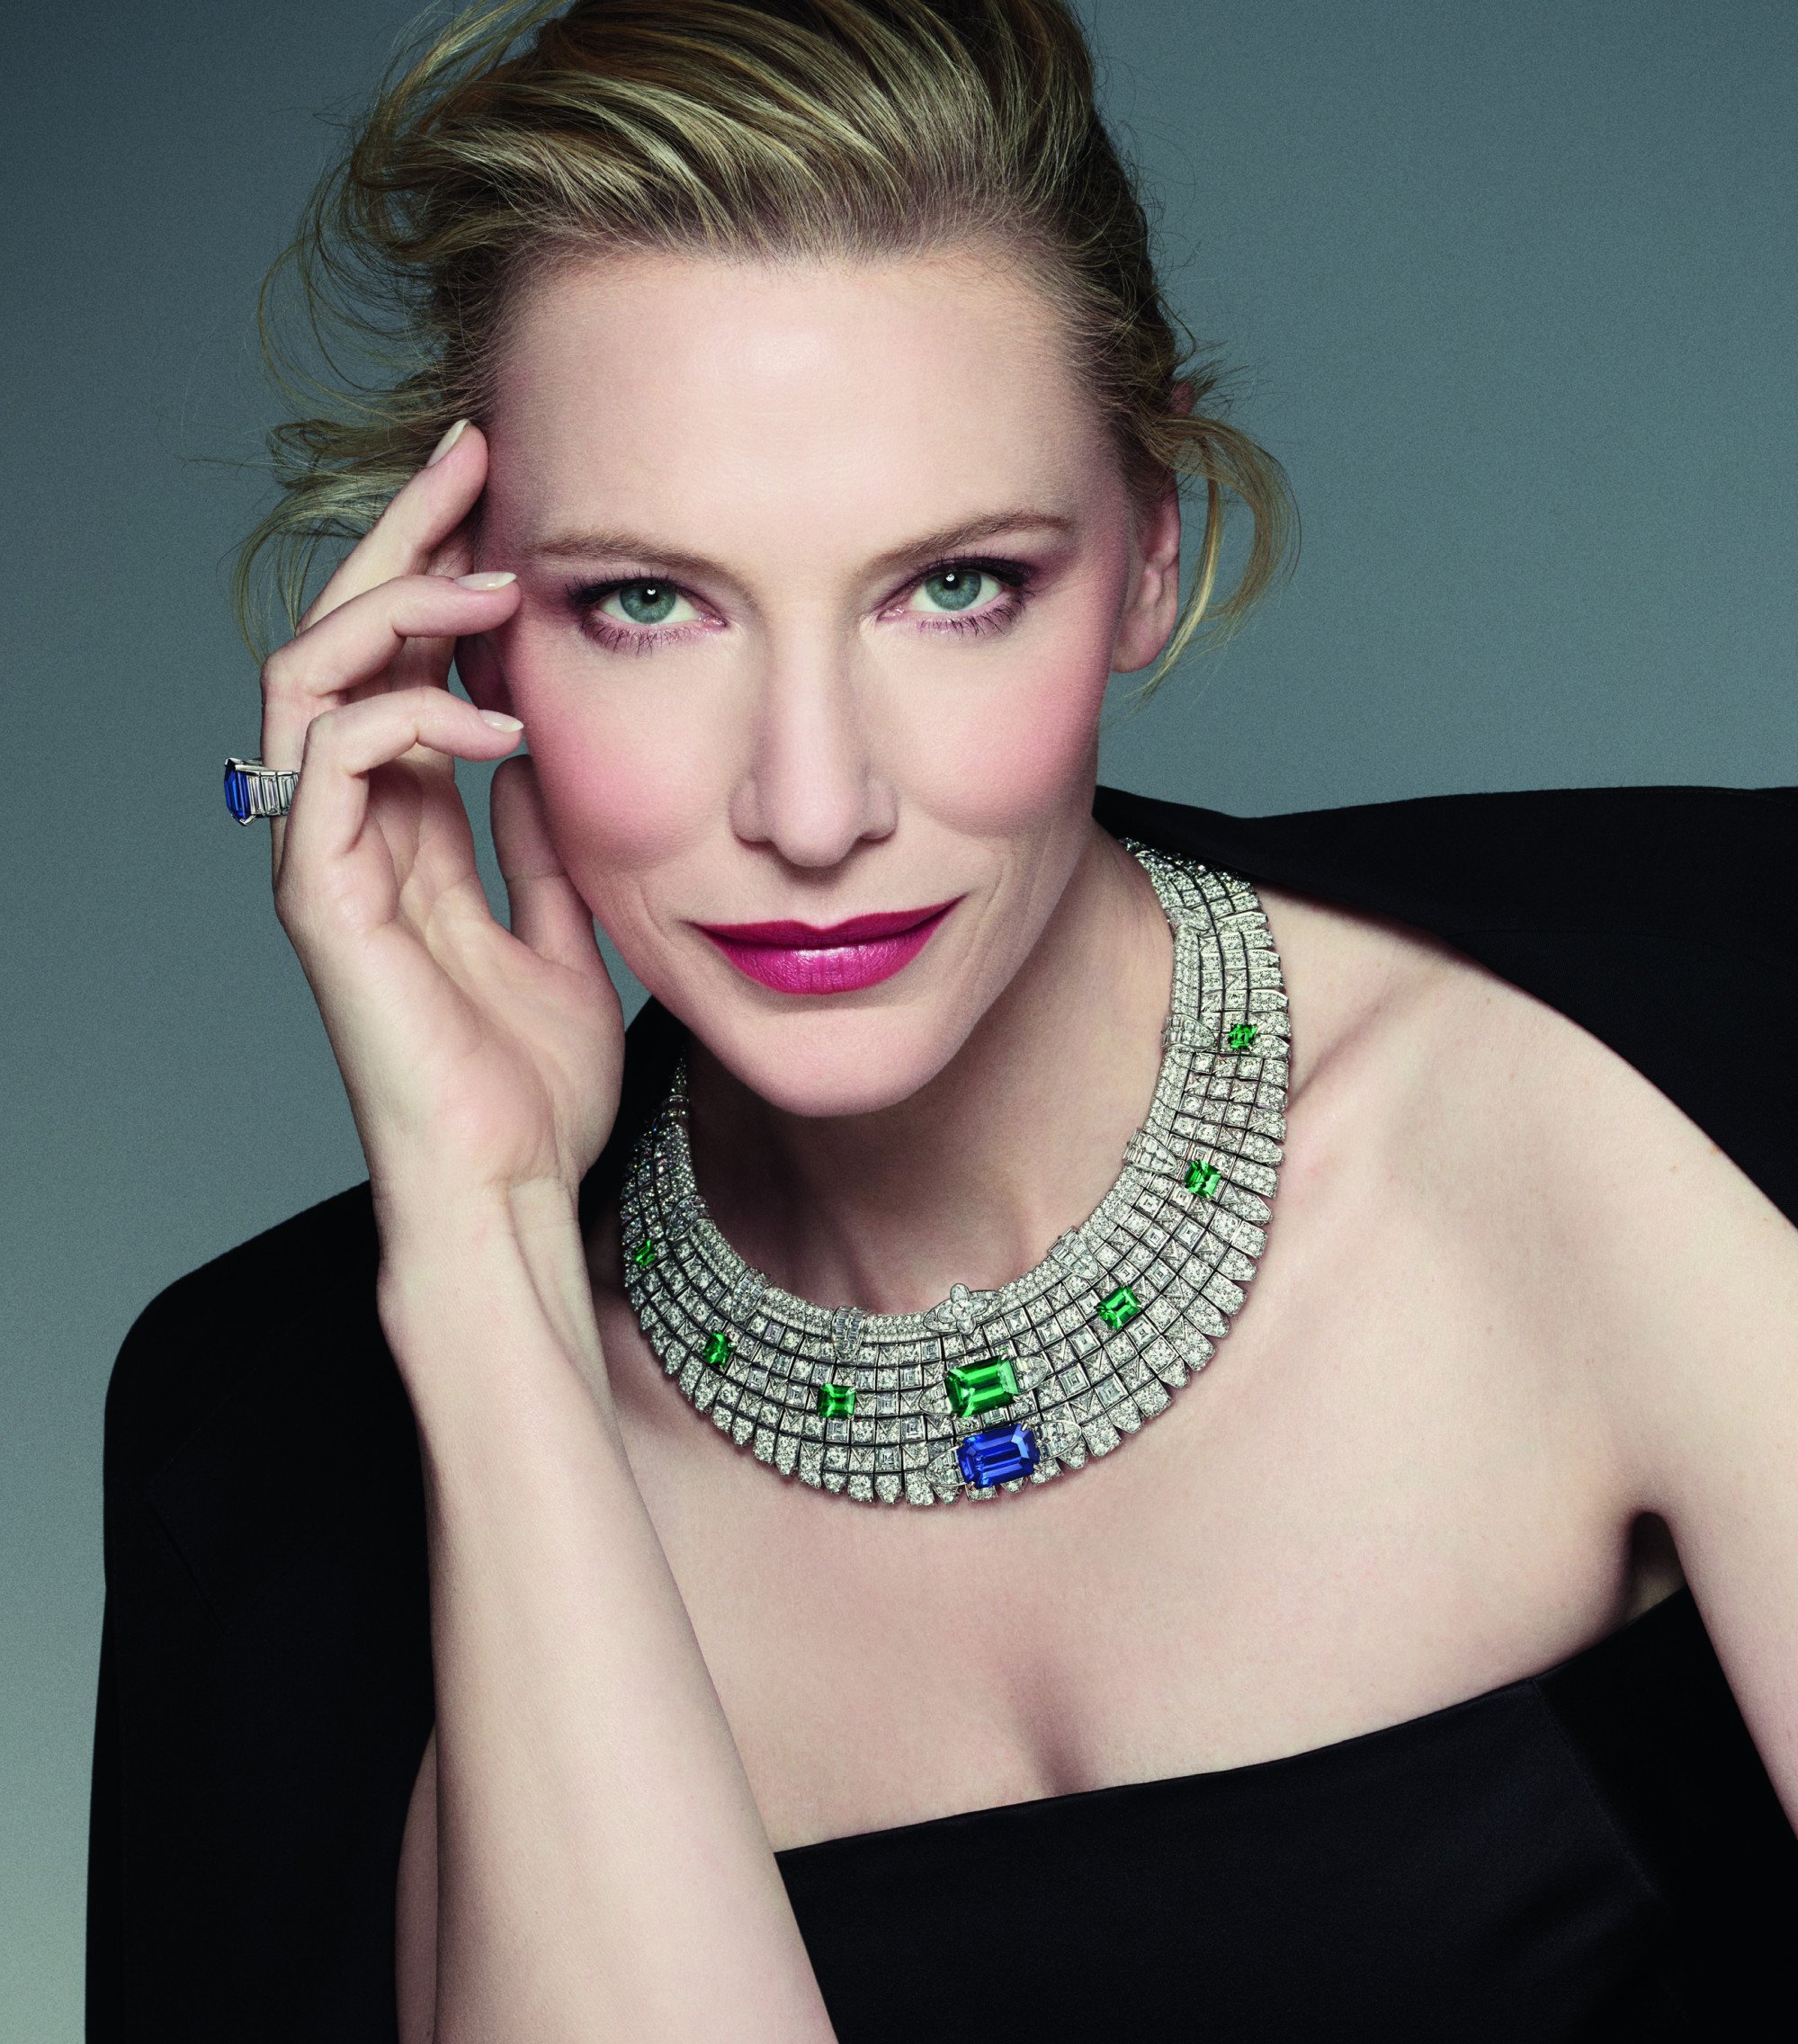 Meet Louis Vuitton's high jewellery designer who's making